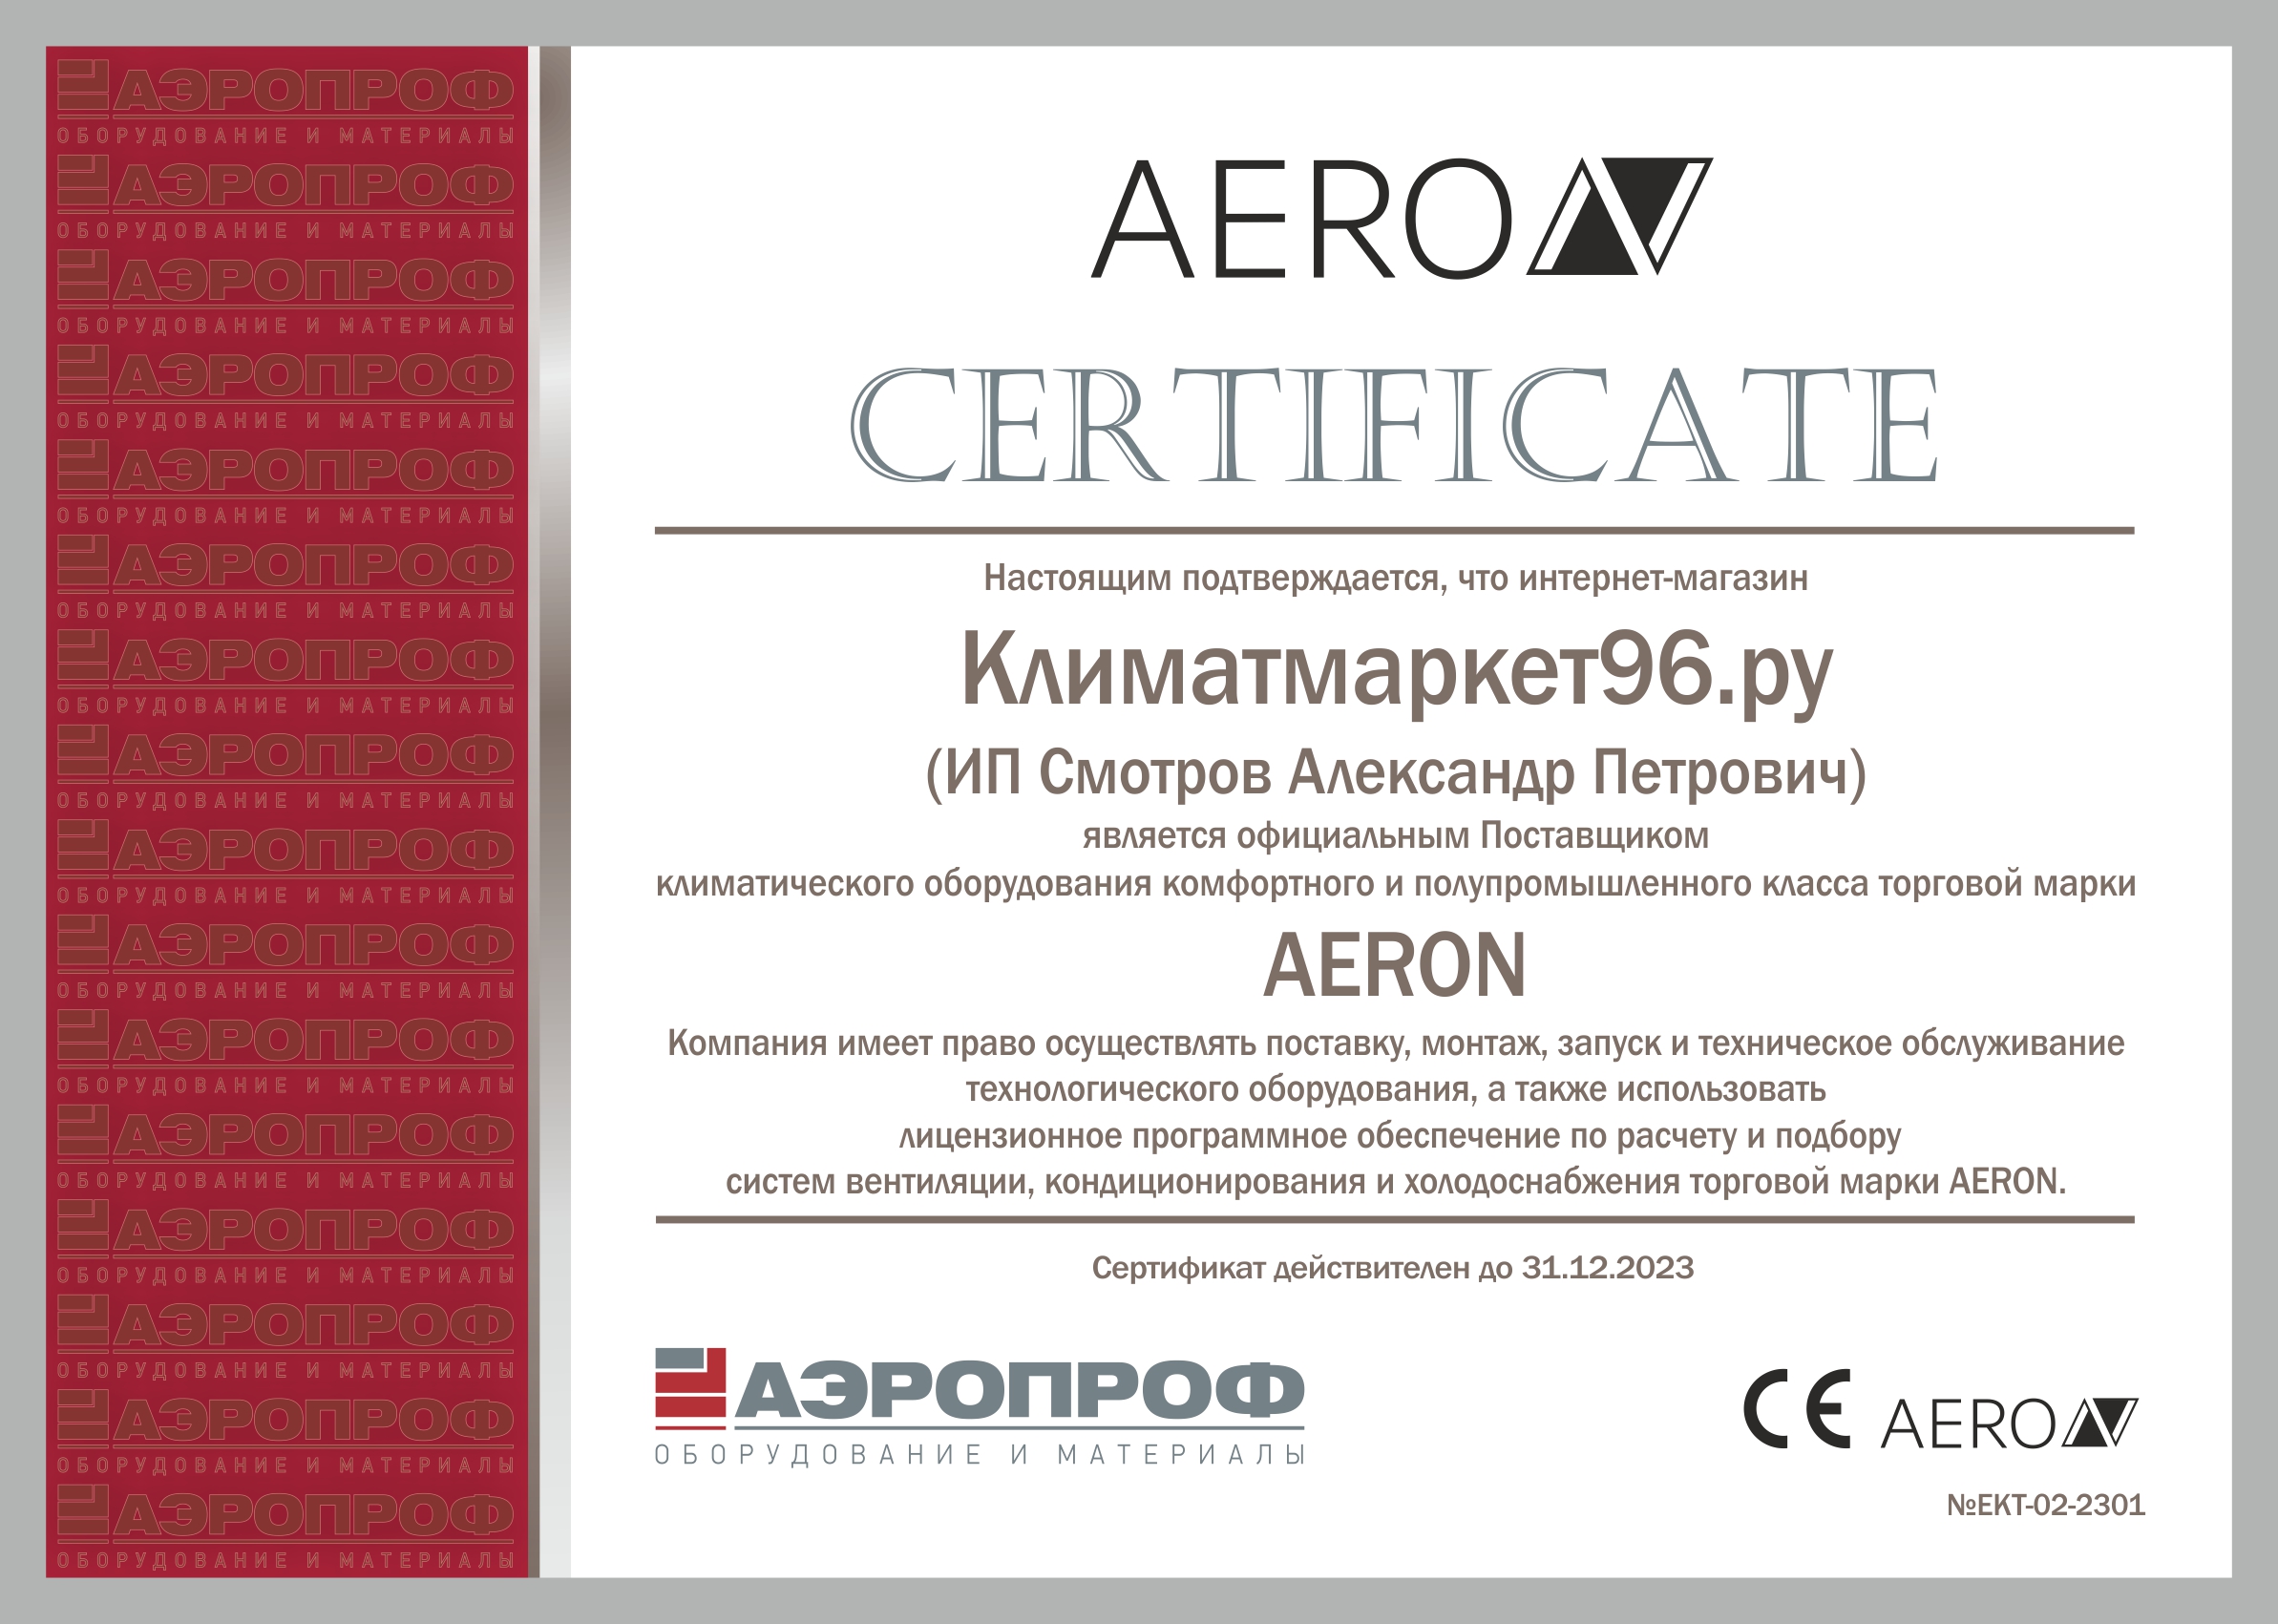 sert23-km96-aeron Kondicioner Aero ALRS-09IH3A-02/ALRS-09OH3A-02 kypit v Ekaterinbyrge v internet-magazine KlimatMarket96.ry Сертификат официального дилера